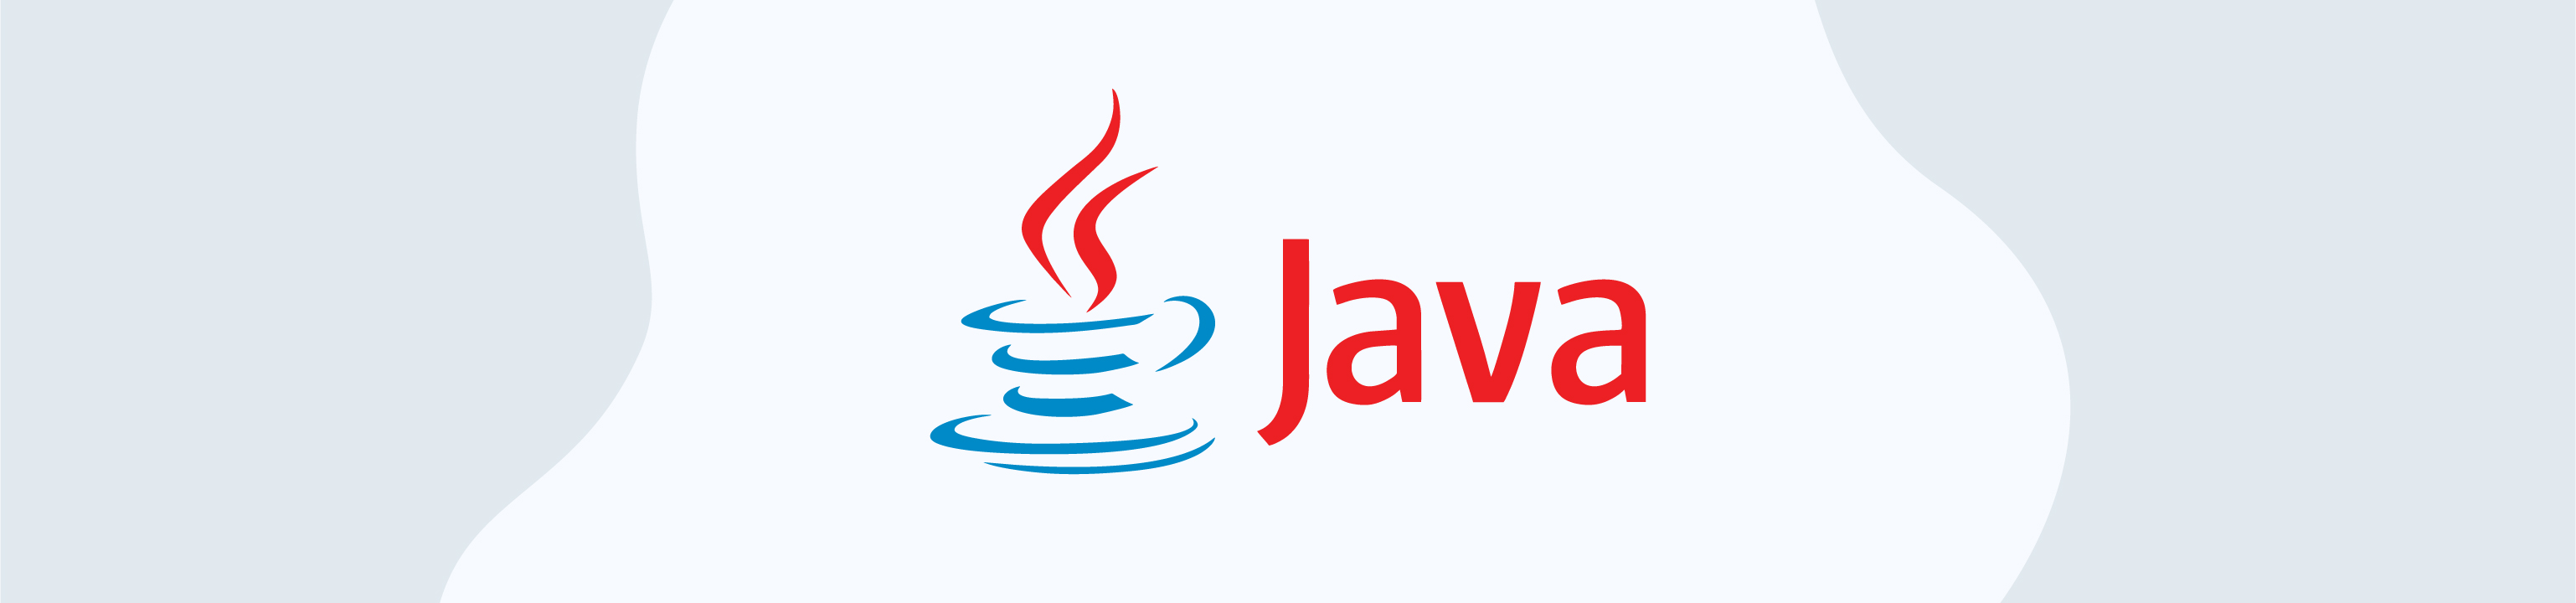 Image — Java — language of the future